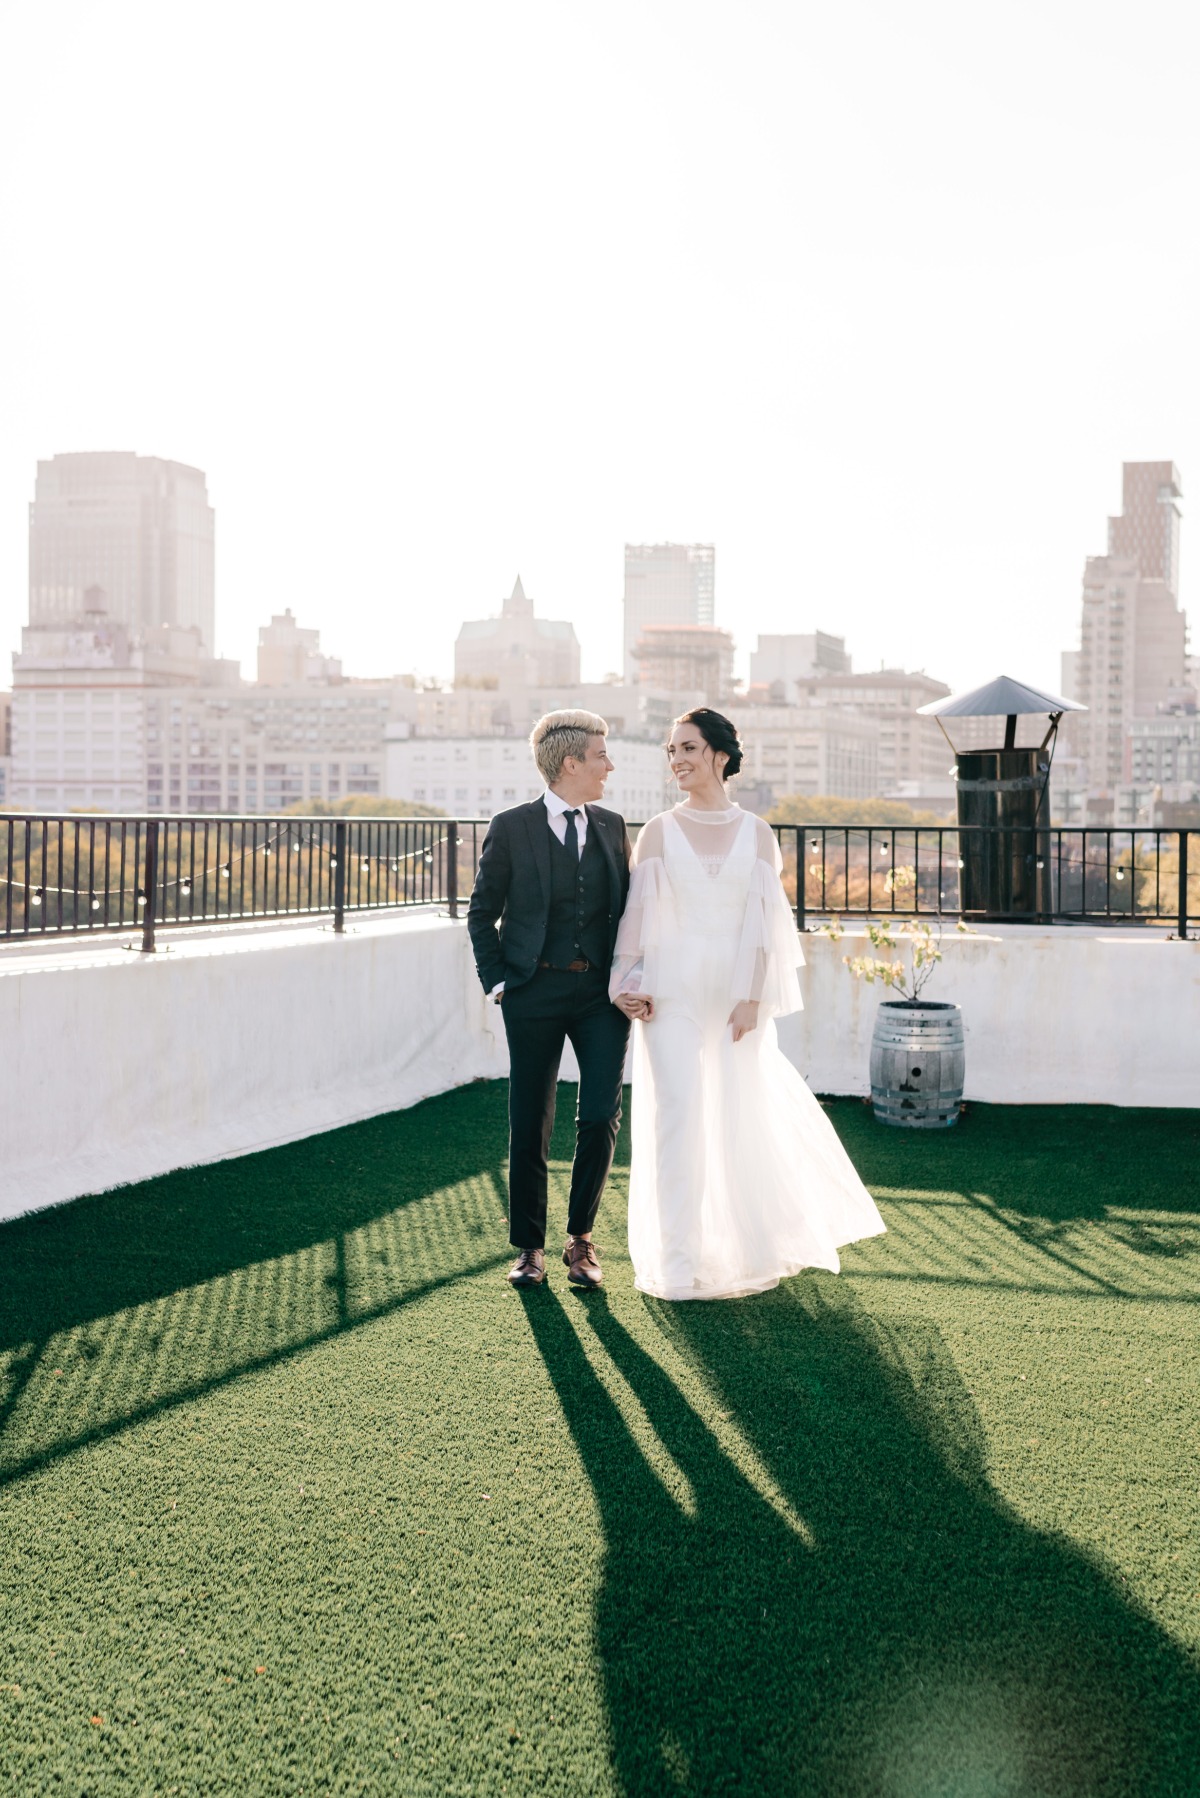 20K Micro Wedding At A Rooftop Vineyard In Brooklyn